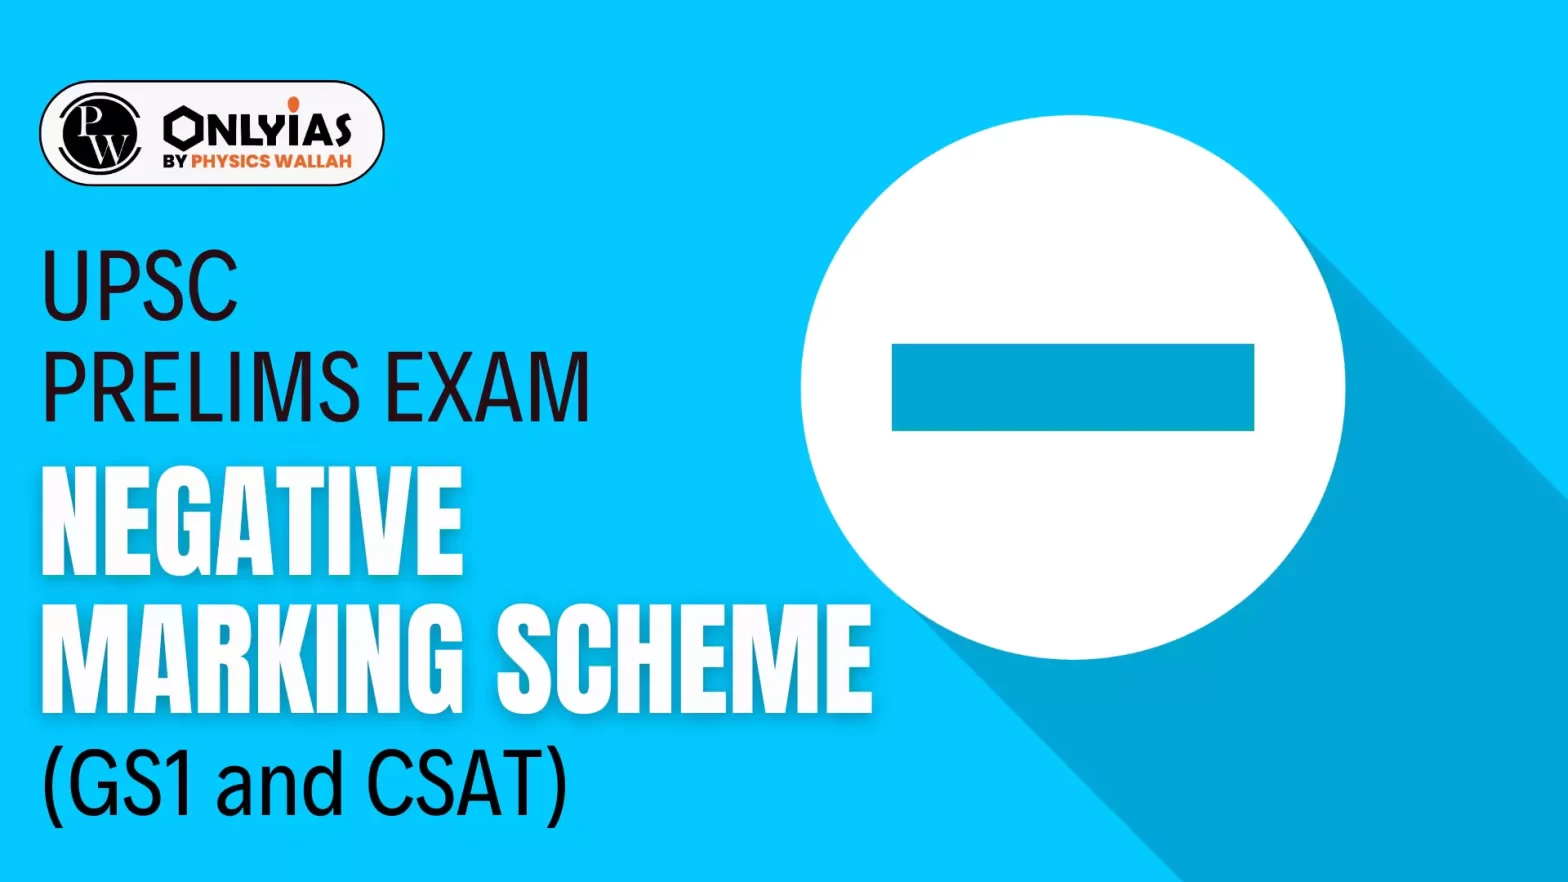 UPSC Prelims Exam Negative Marking Scheme (GS1 and CSAT)